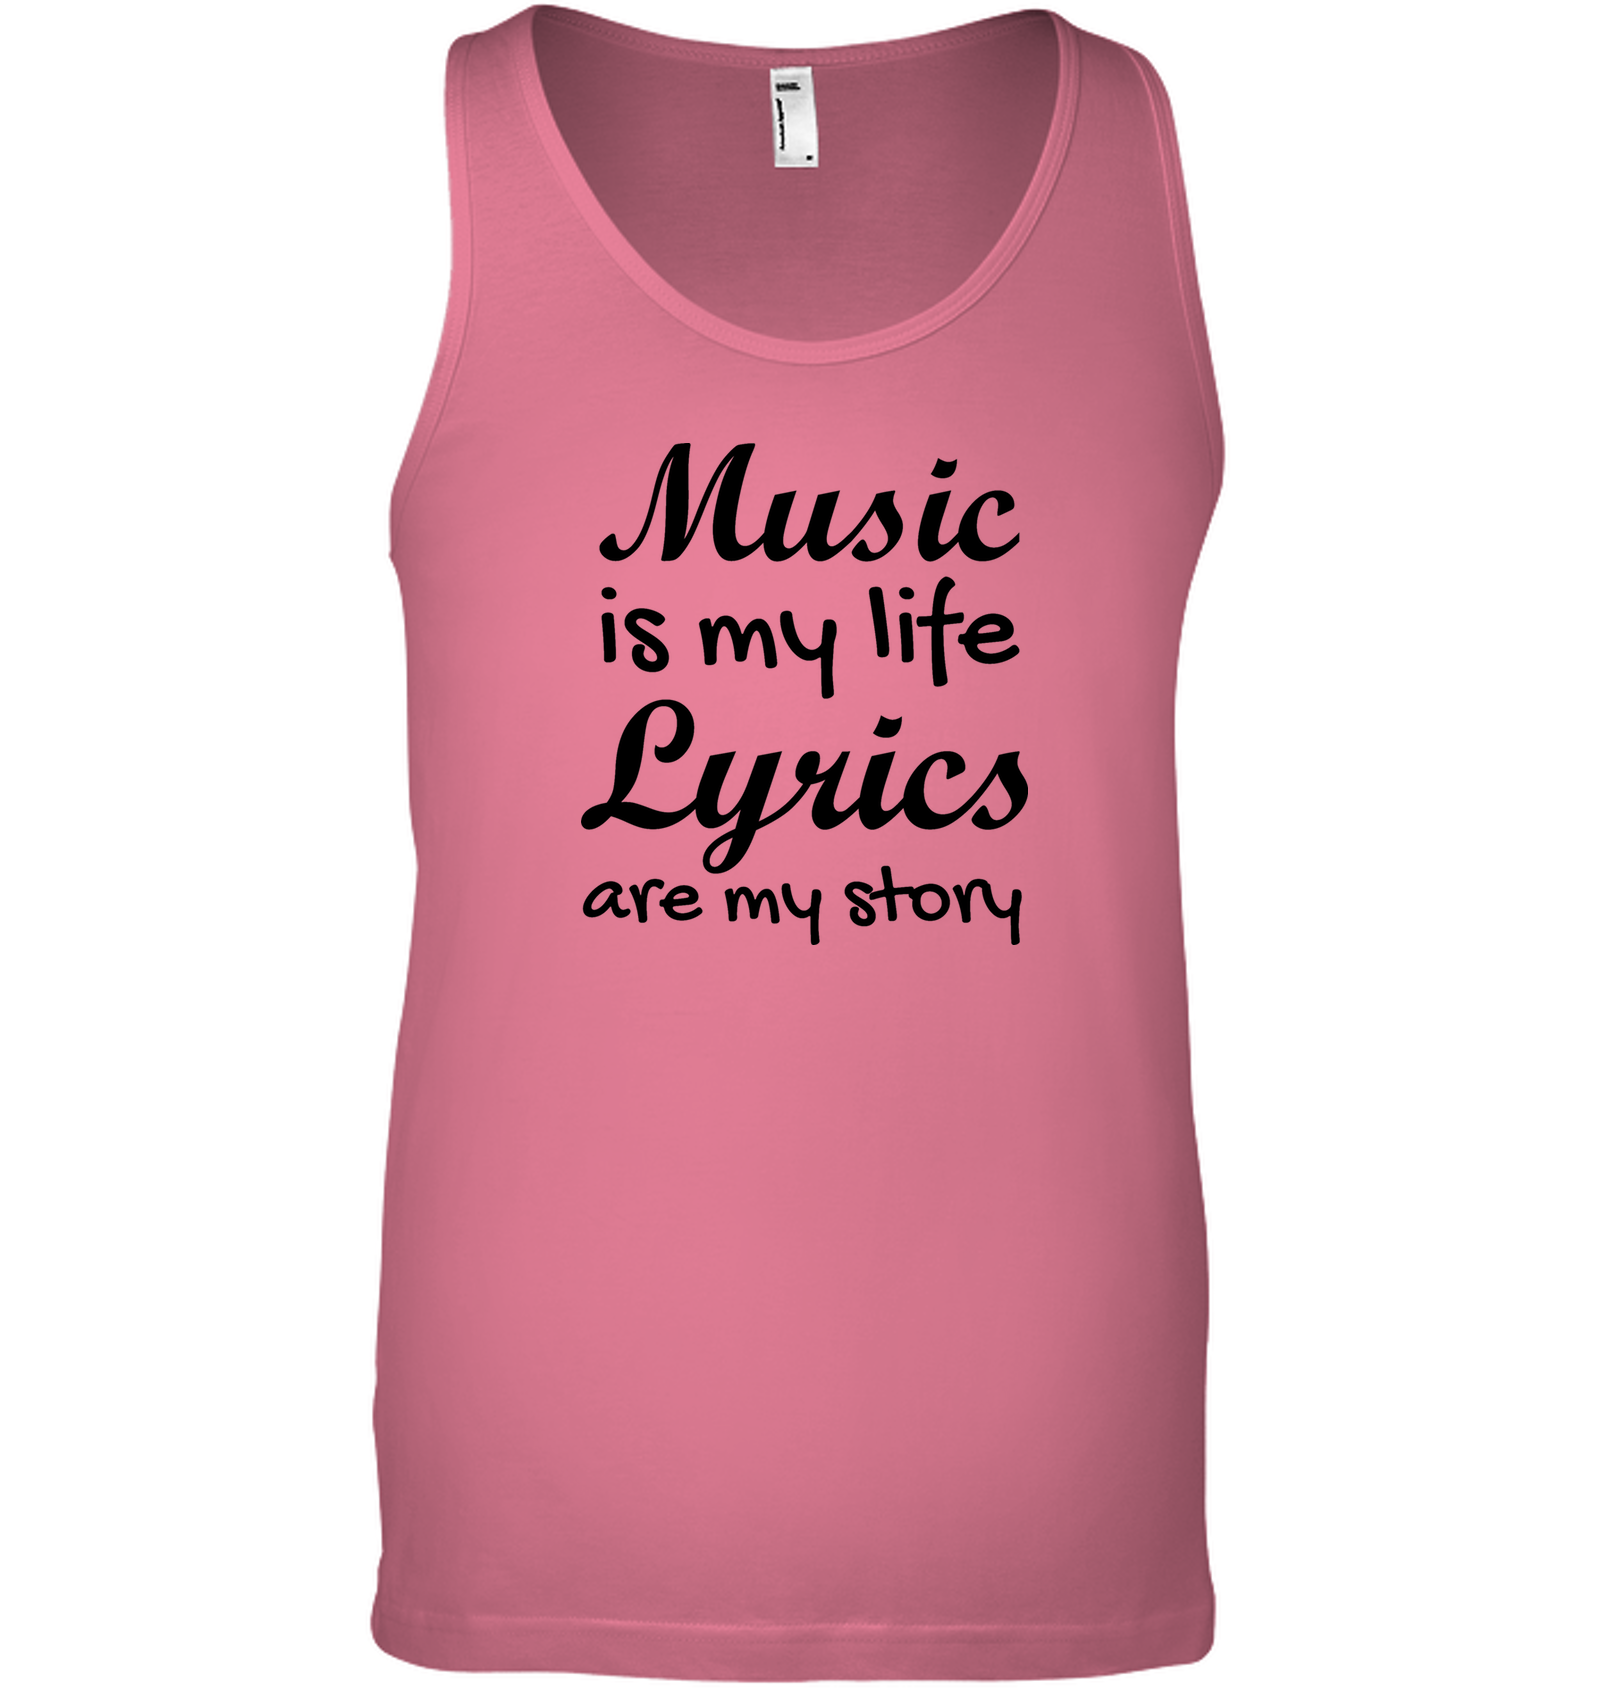 Music is my life Lyrics are my story - Bella + Canvas Unisex Jersey Tank